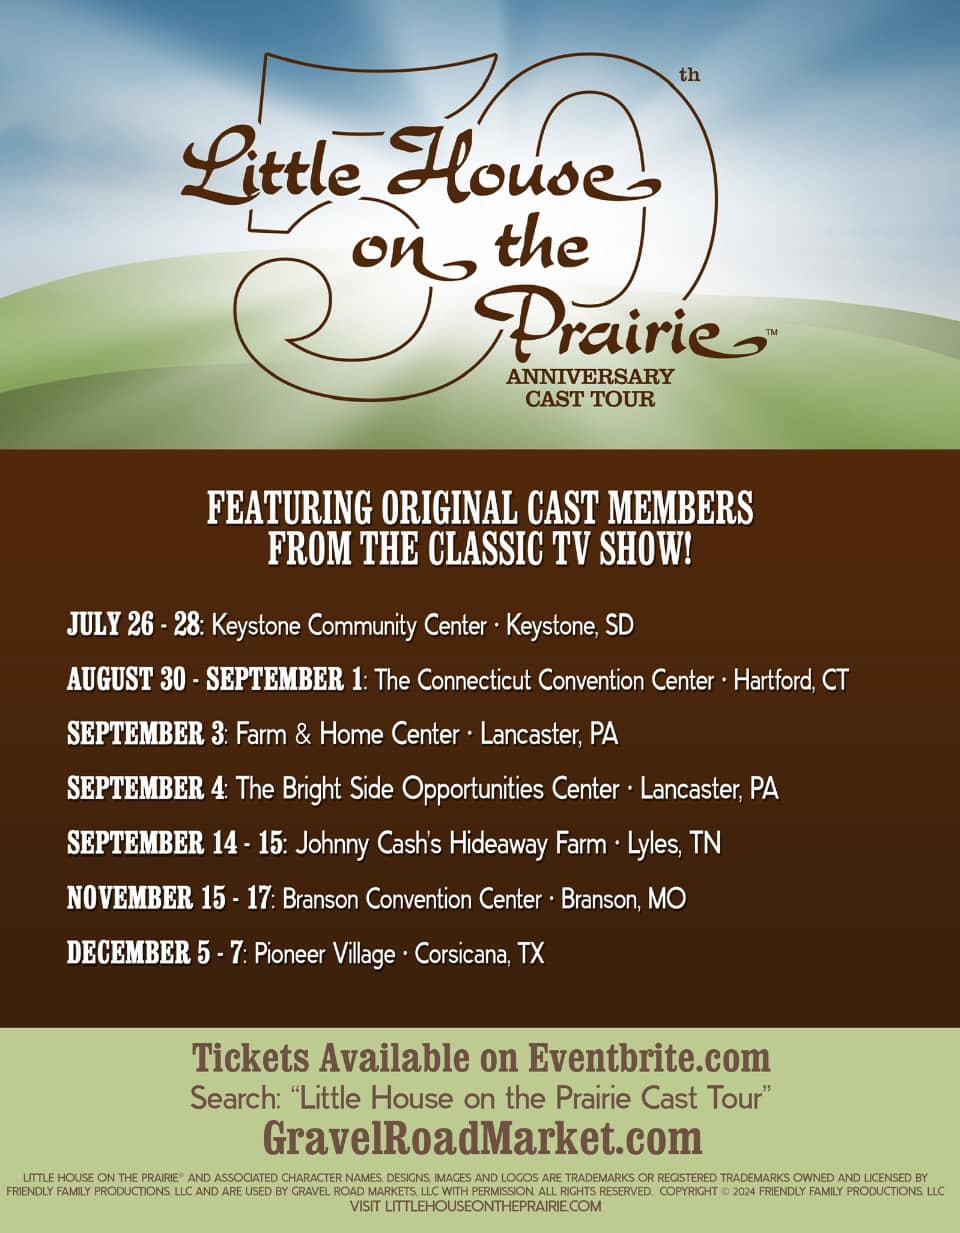 Little House on the Prairie 50th anniversary tour dates